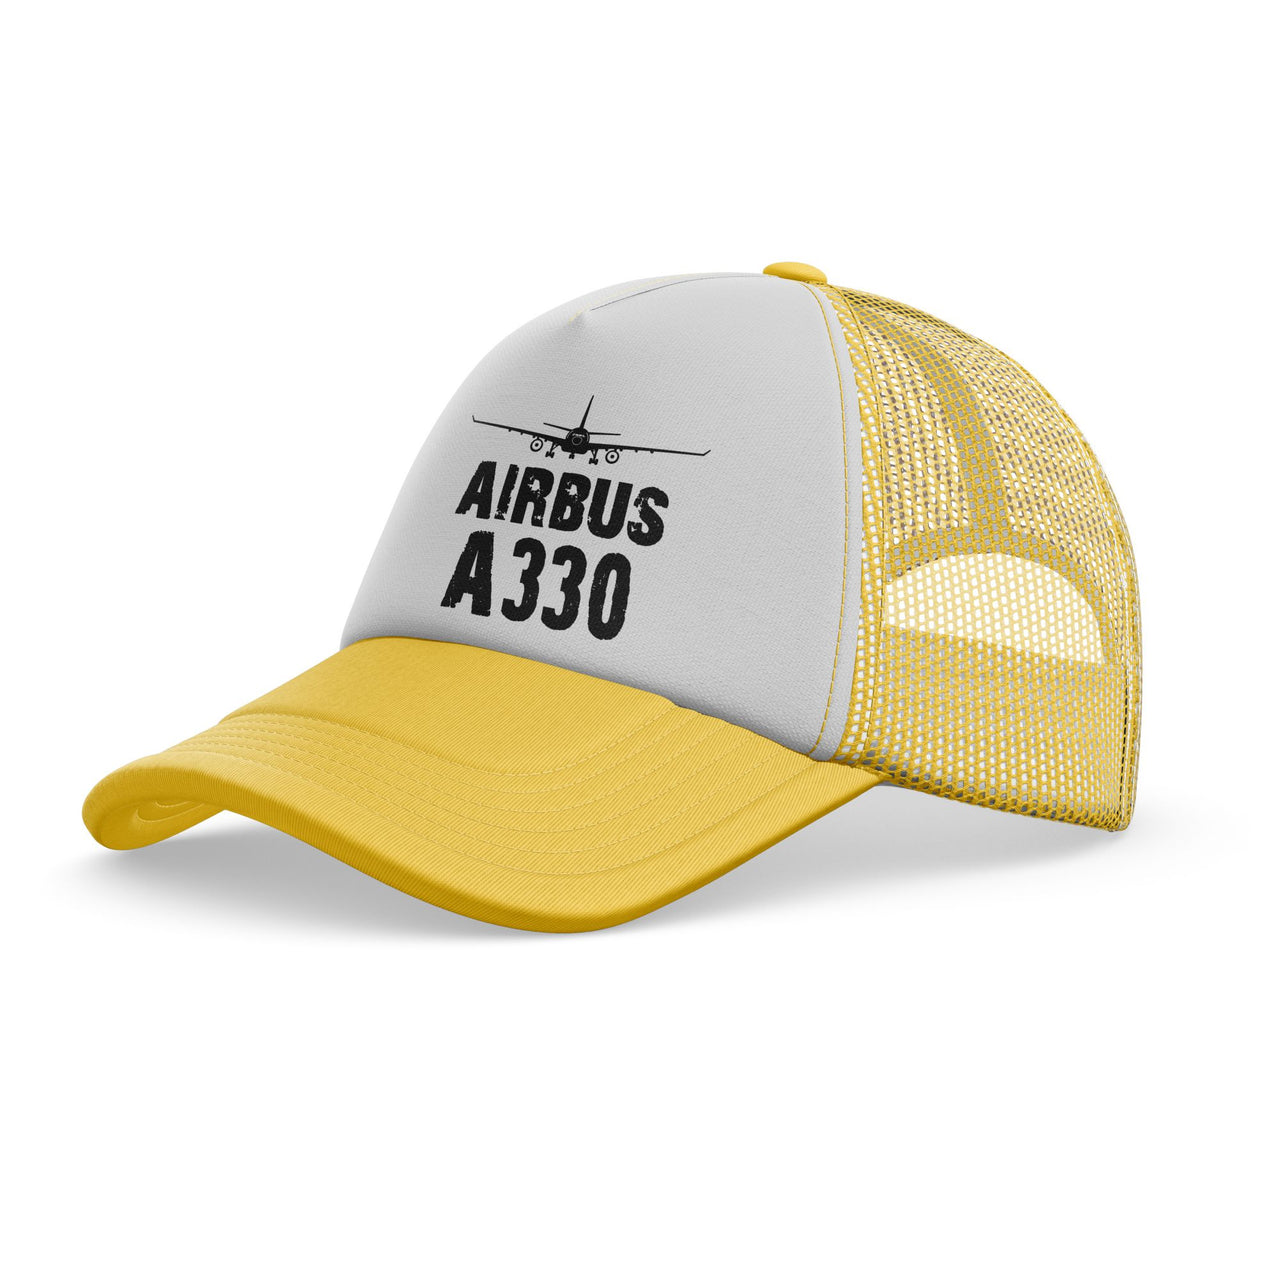 Airbus A330 & Plane Designed Trucker Caps & Hats